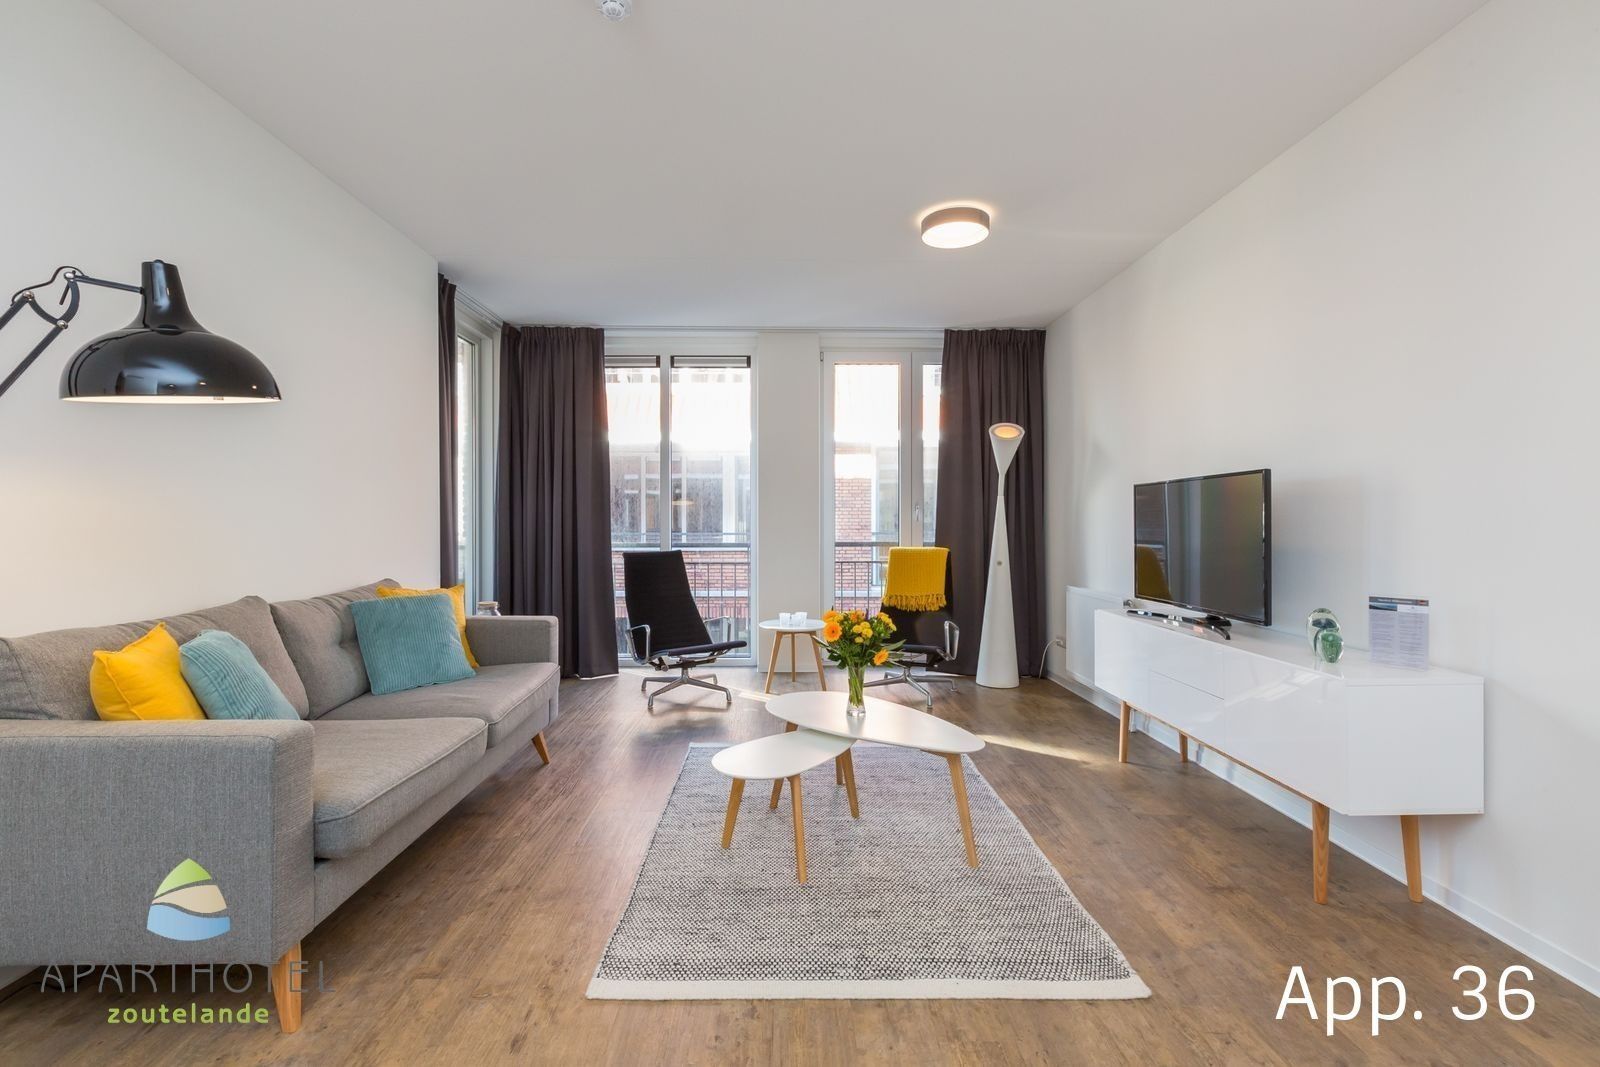 Appartamento Luxury 3-person comfort apartment | Zoutelande Zoutelande 1